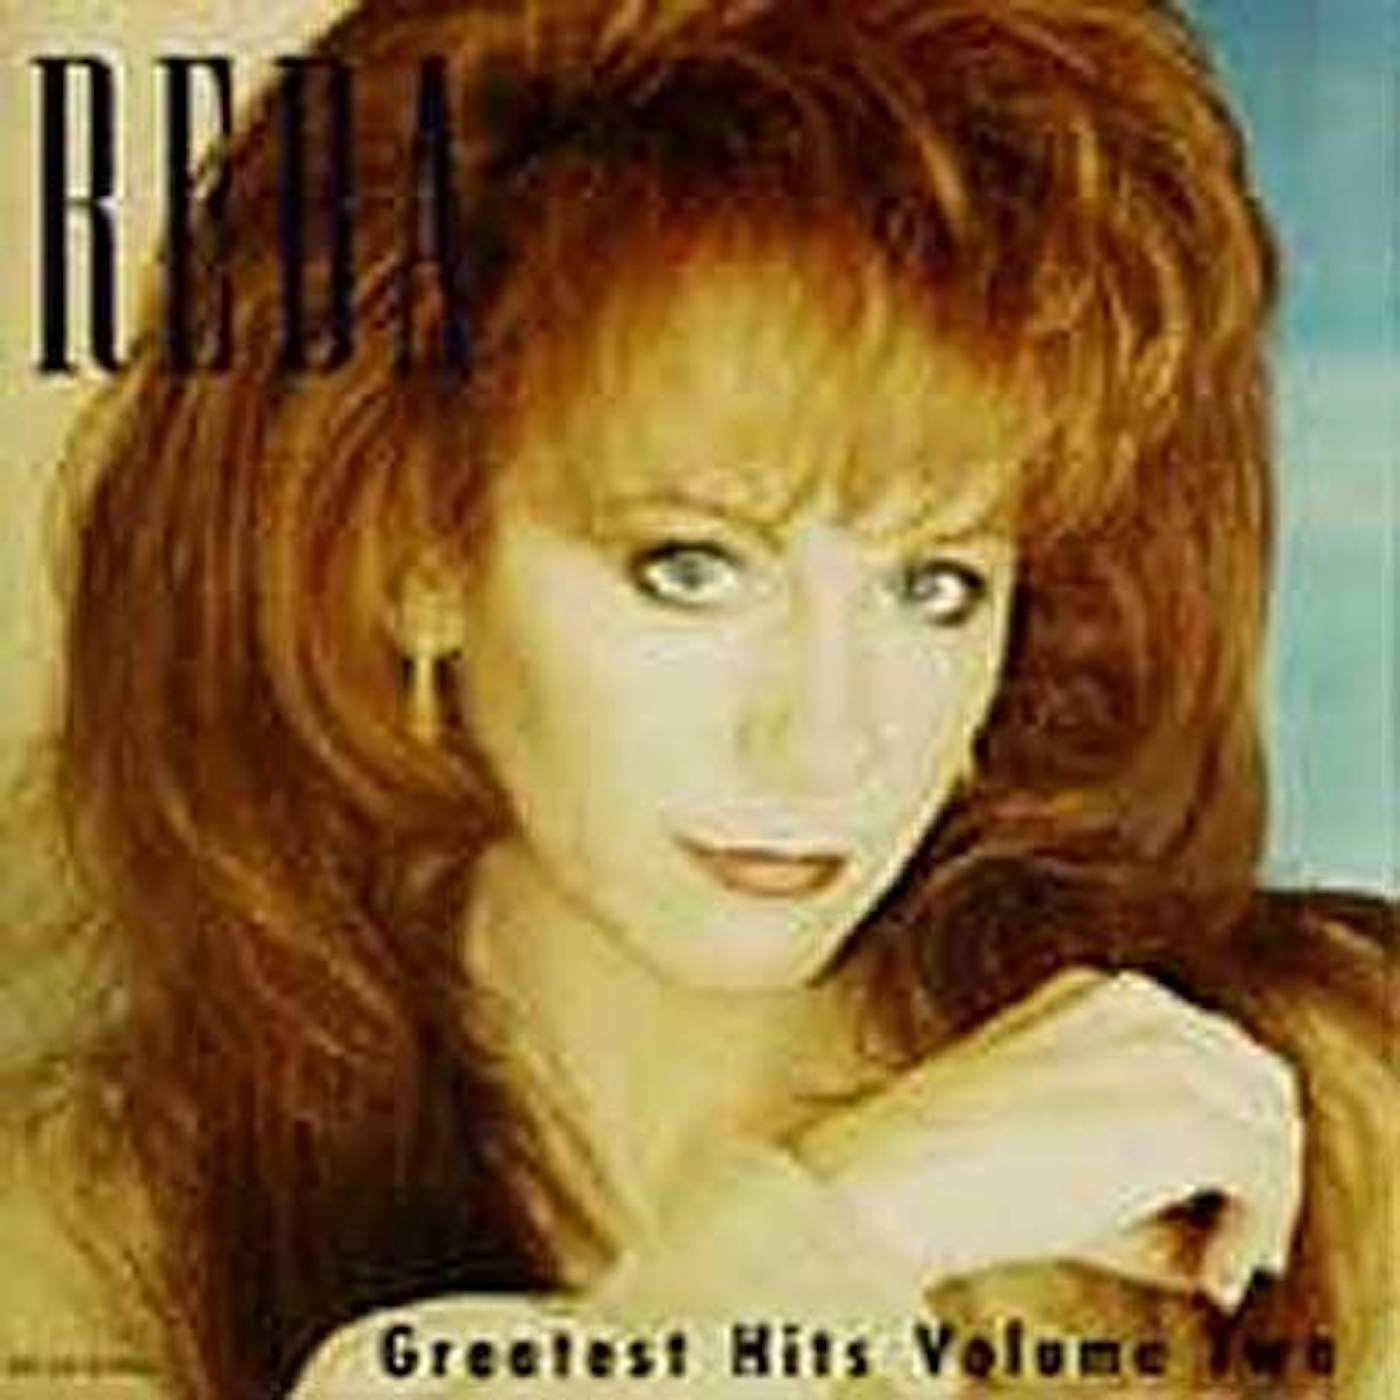 Reba McEntire GREATEST HITS 2 CD